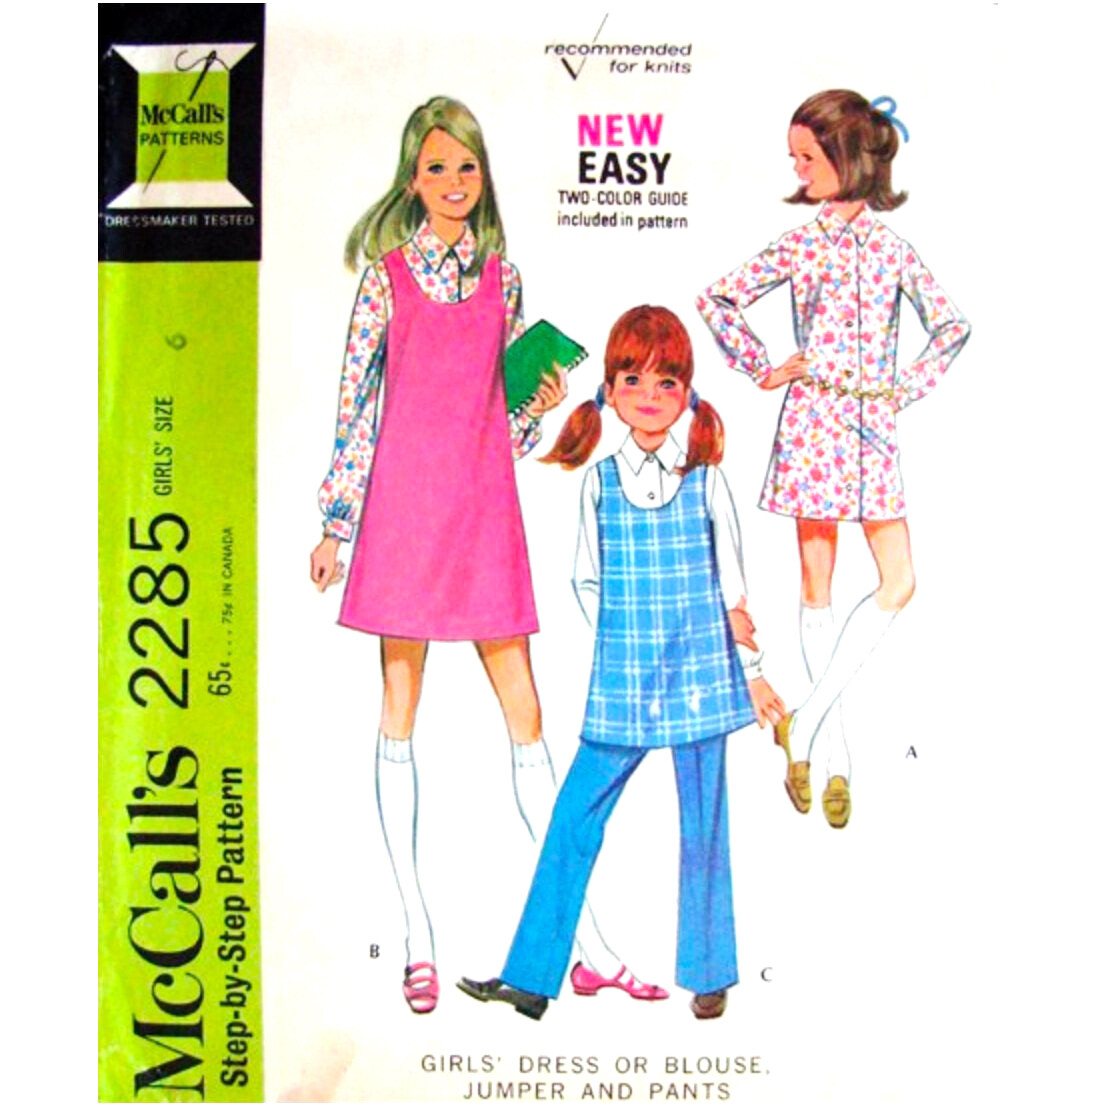 Girls Dress, Blouse, Jumper, Pants Pattern McCall's 2285